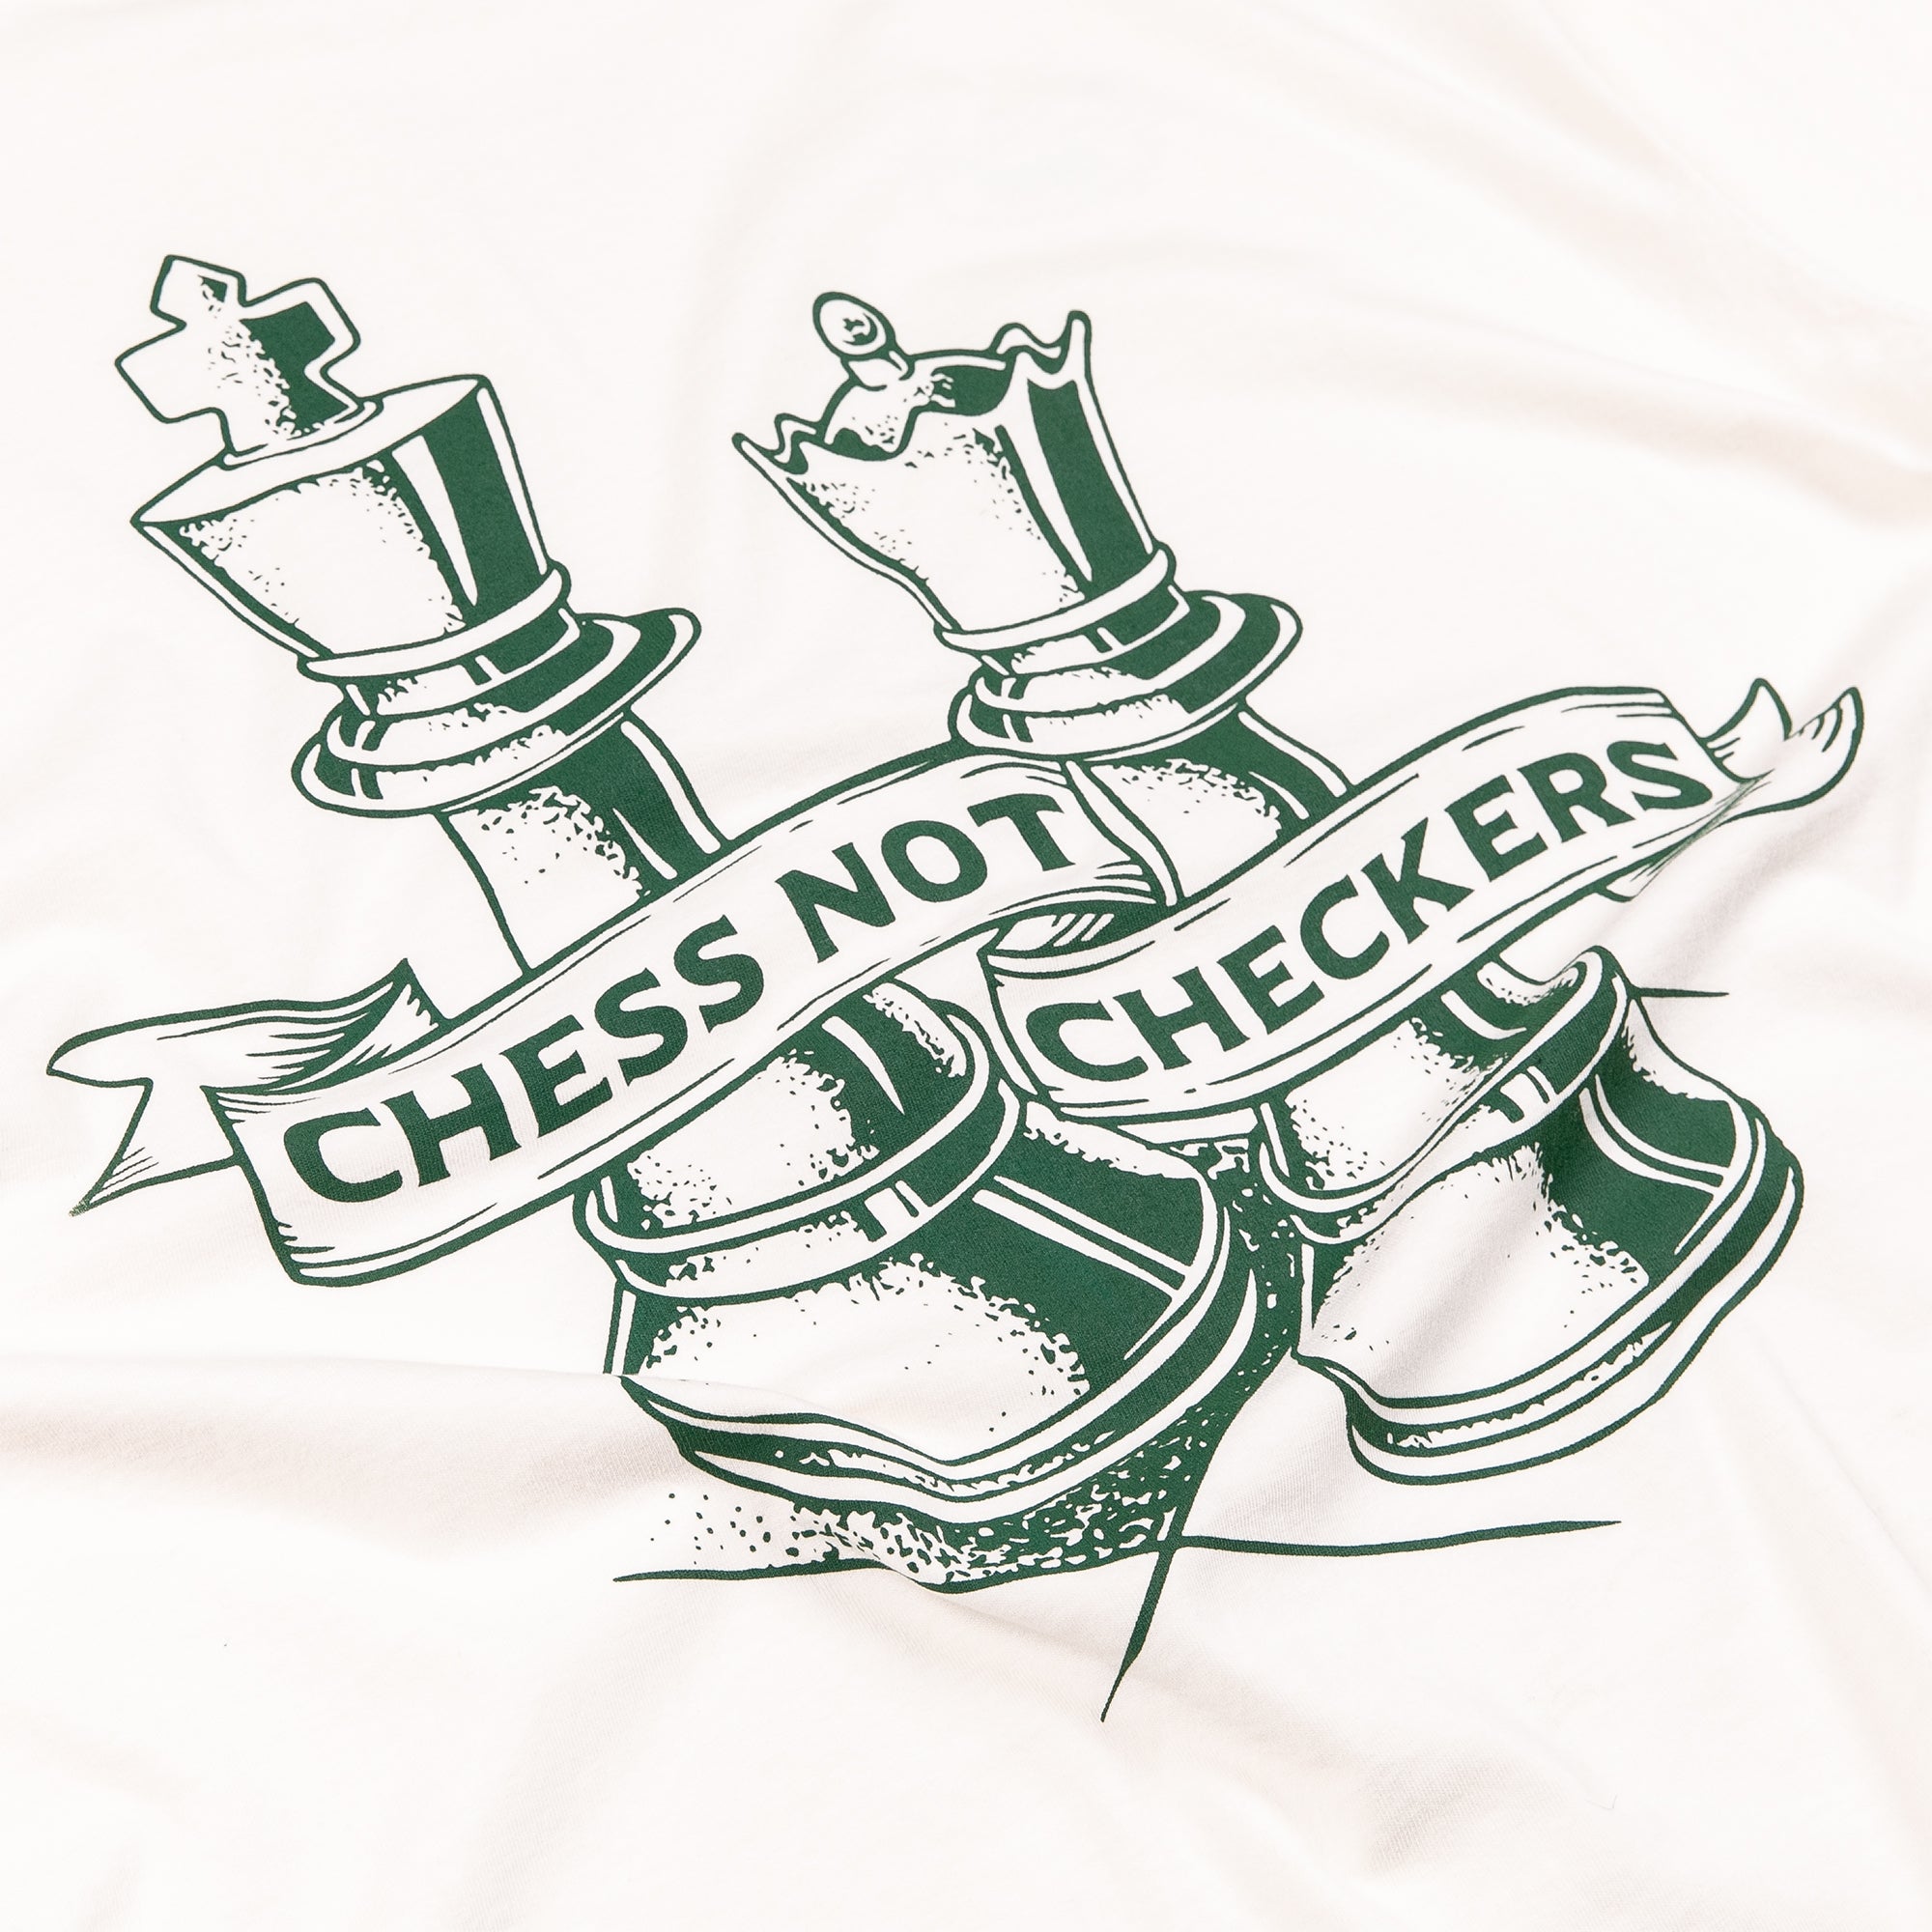 T-Shirt in Cloud Dancer - Chess - Checkers CNC not